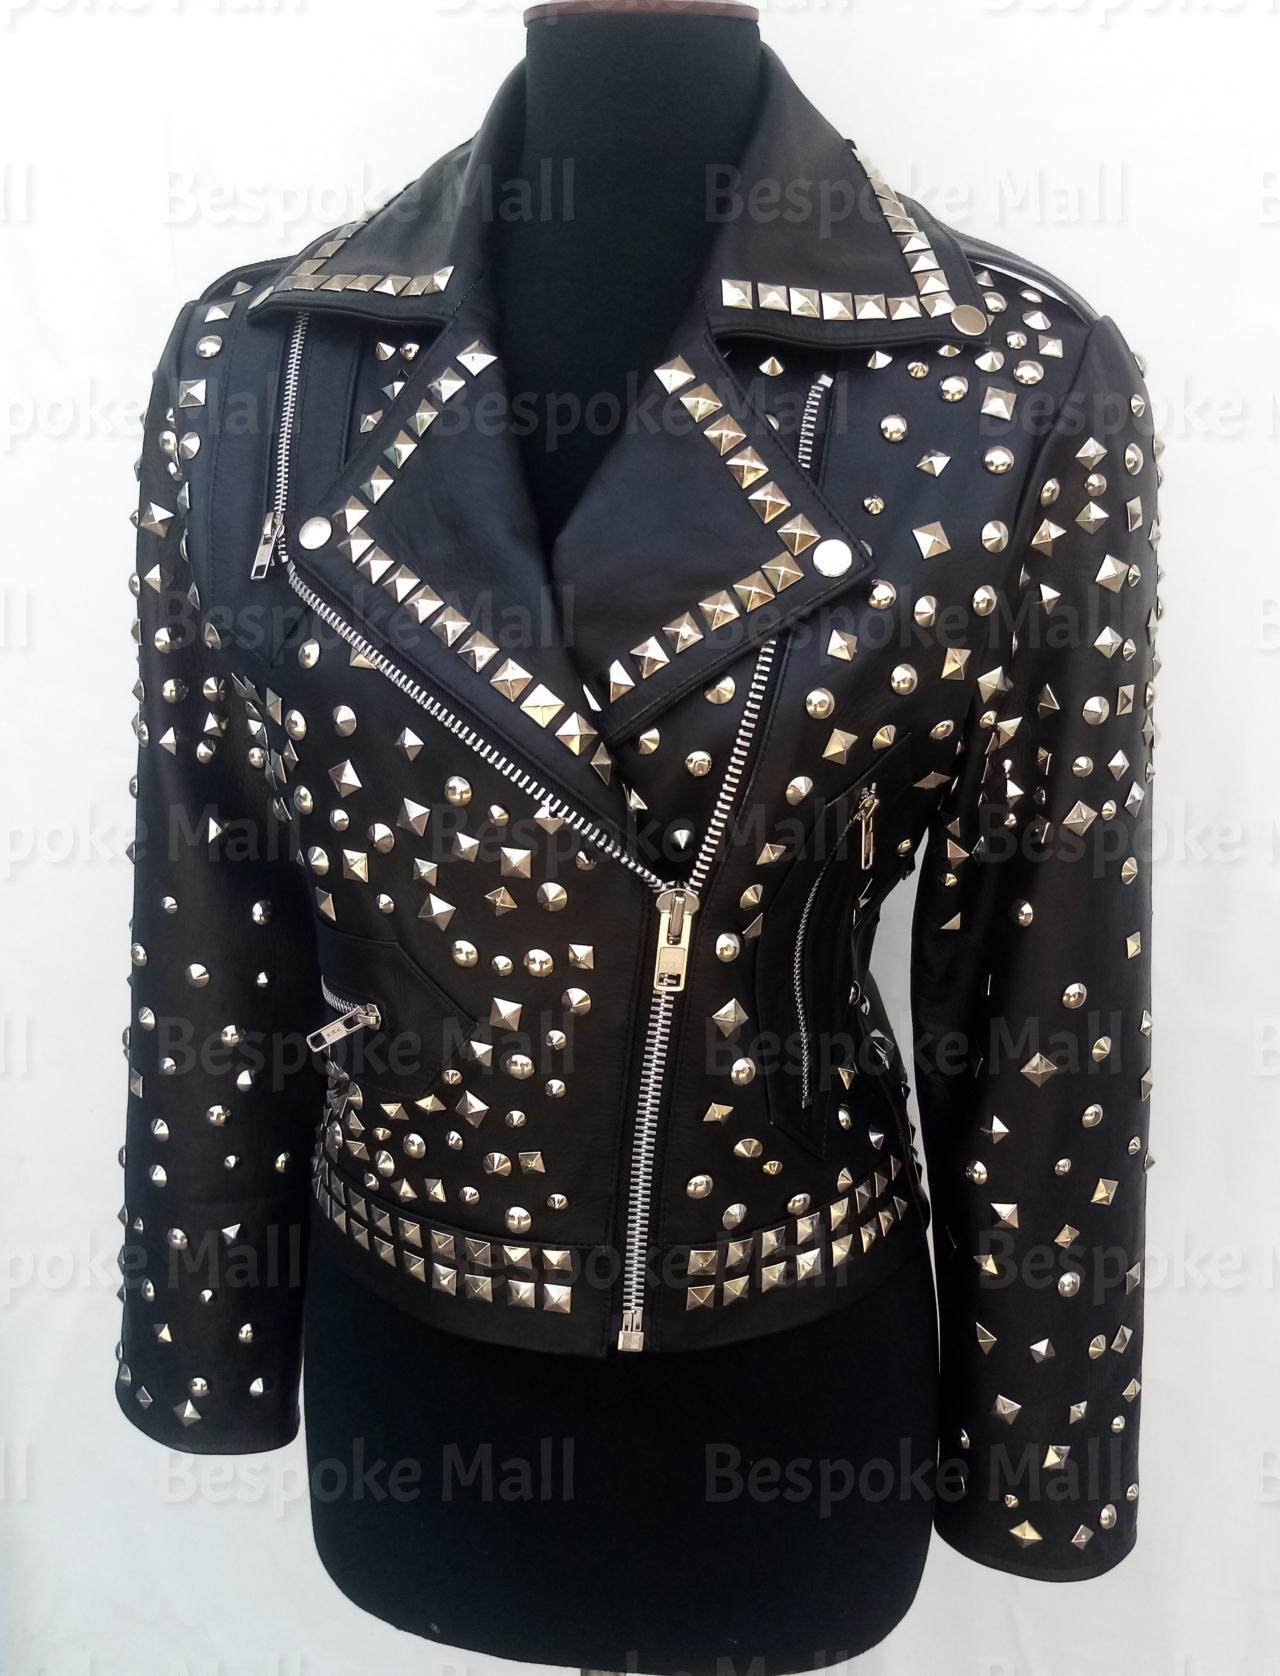 Handmade Women Black Punk Full Silver Studded Brando Unique Biker Zipper Leather Jacket-75